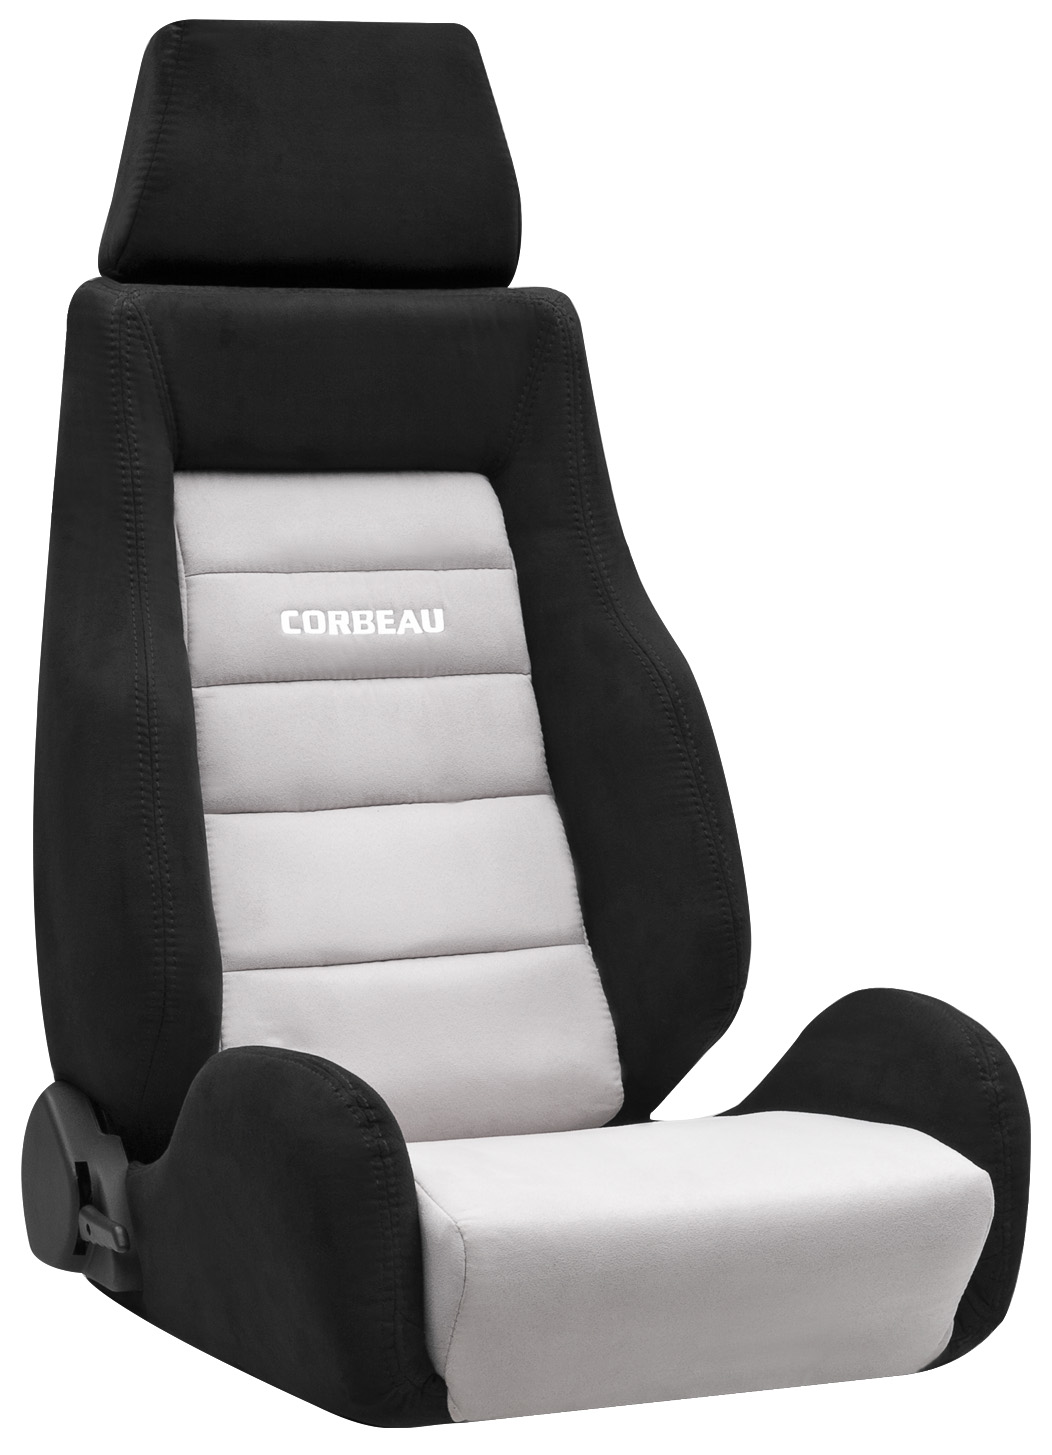 Corbeau GTSII Racing Seat, Black / Grey Microsuede, S20309PR